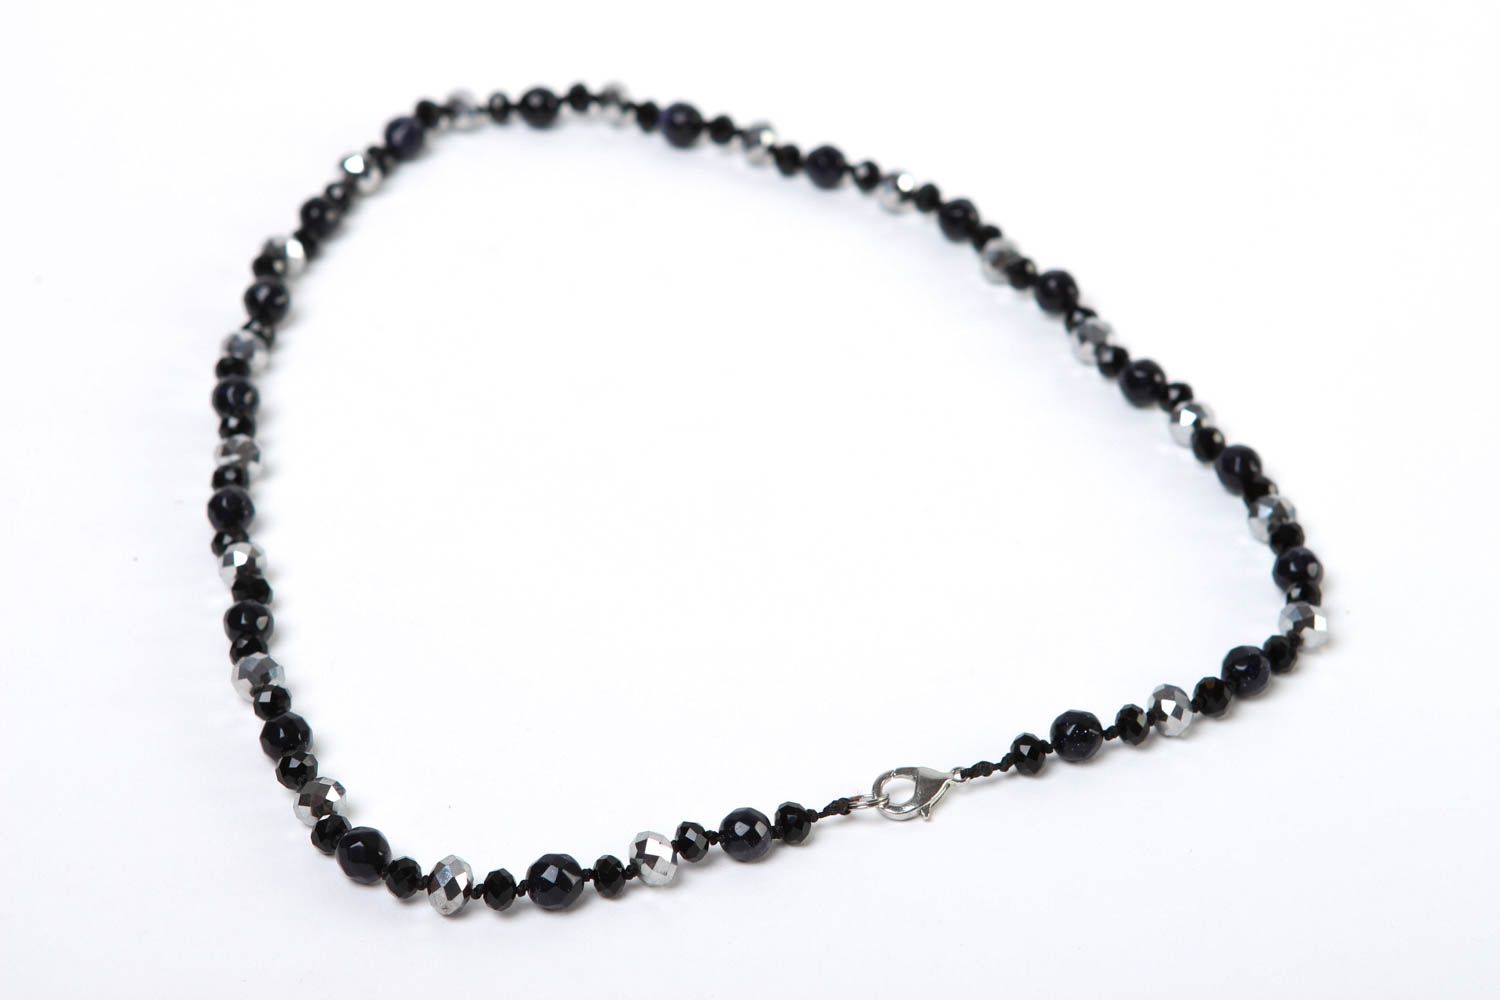 Handmade bead necklace designer accessory gift idea unusual gift fashion jewelry photo 4